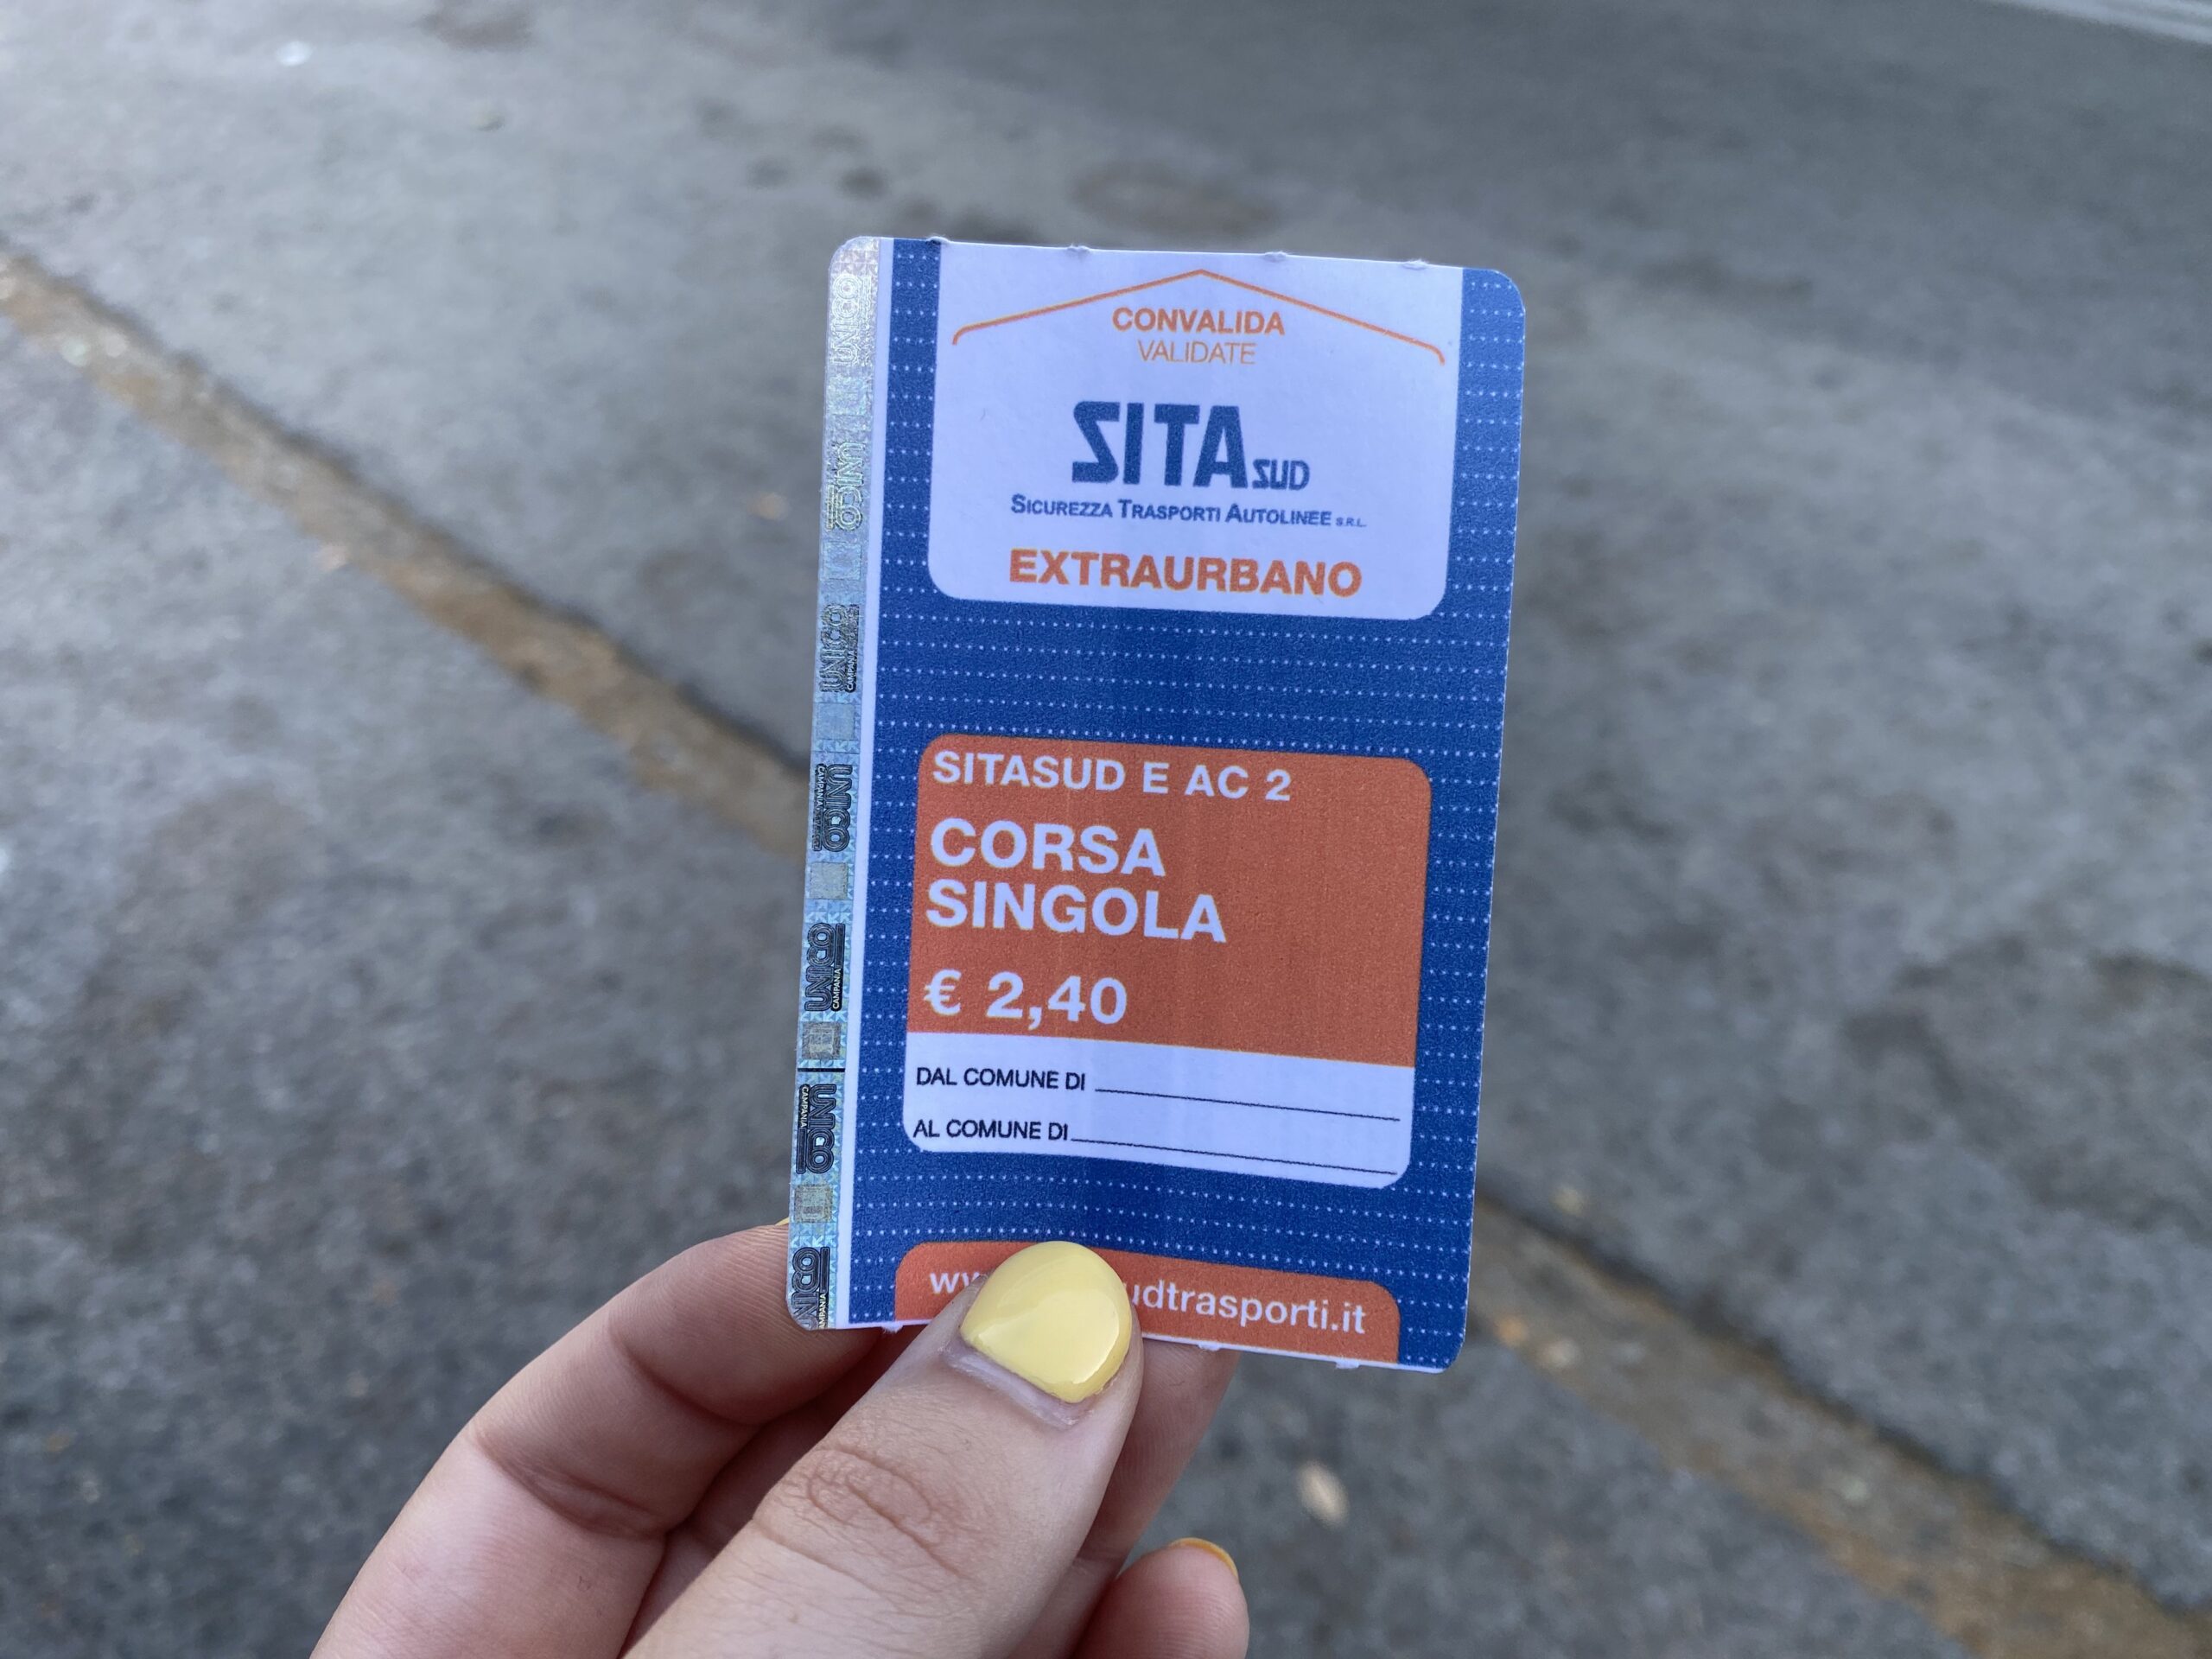 Amalfi Coast SITA bus tickets